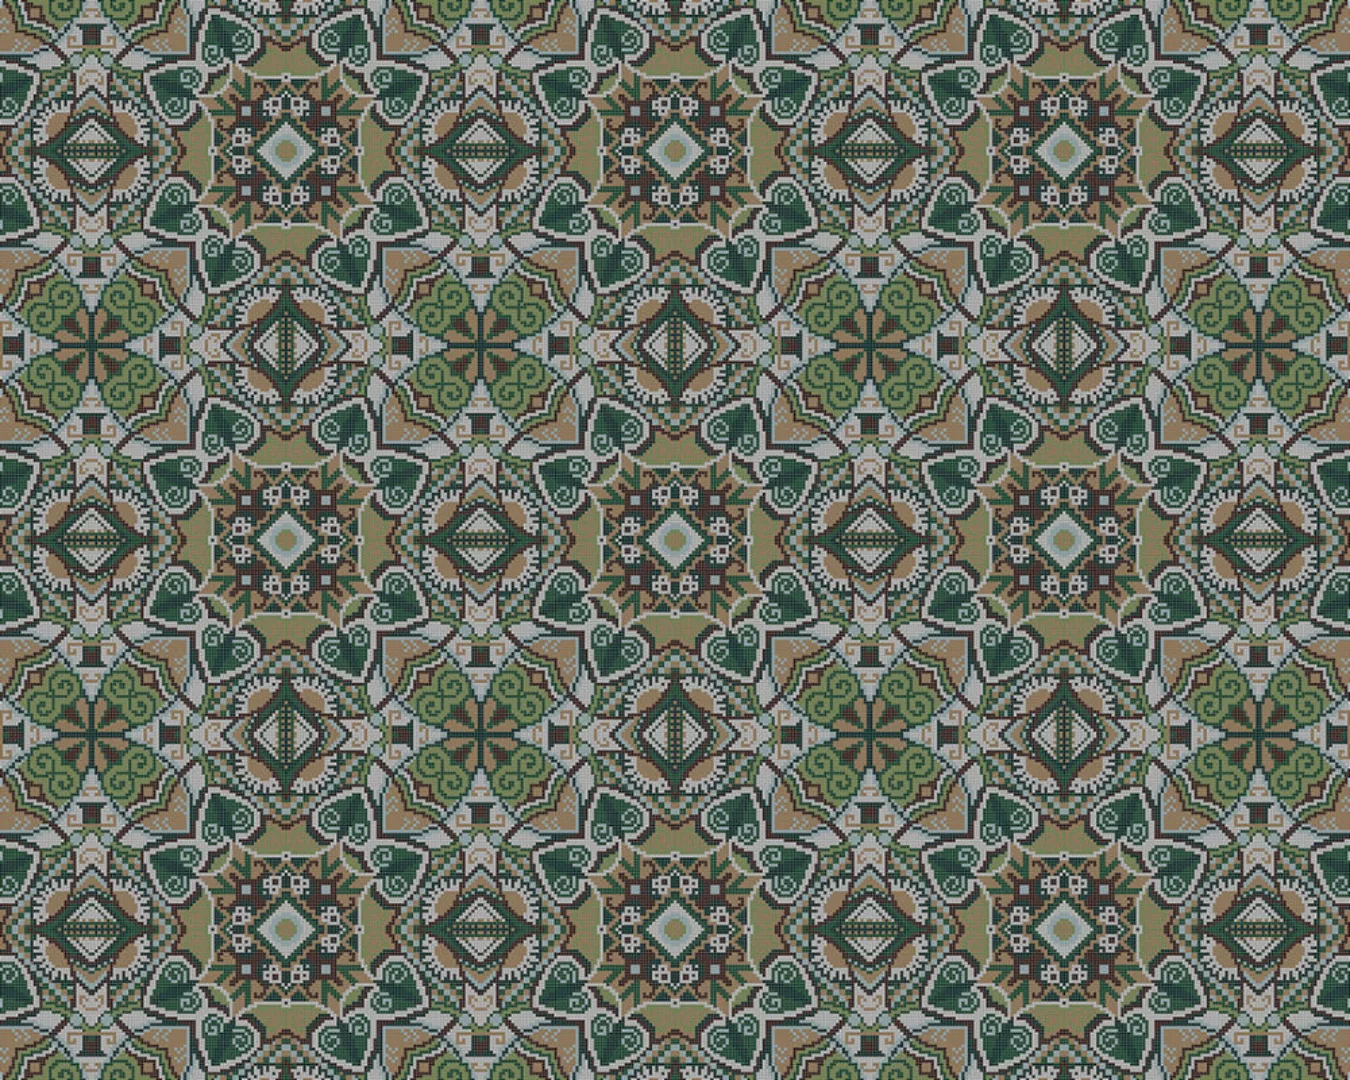 Fototapete "Mosaic II Green" 4,00x2,50 m / Glattvlies Perlmutt günstig online kaufen